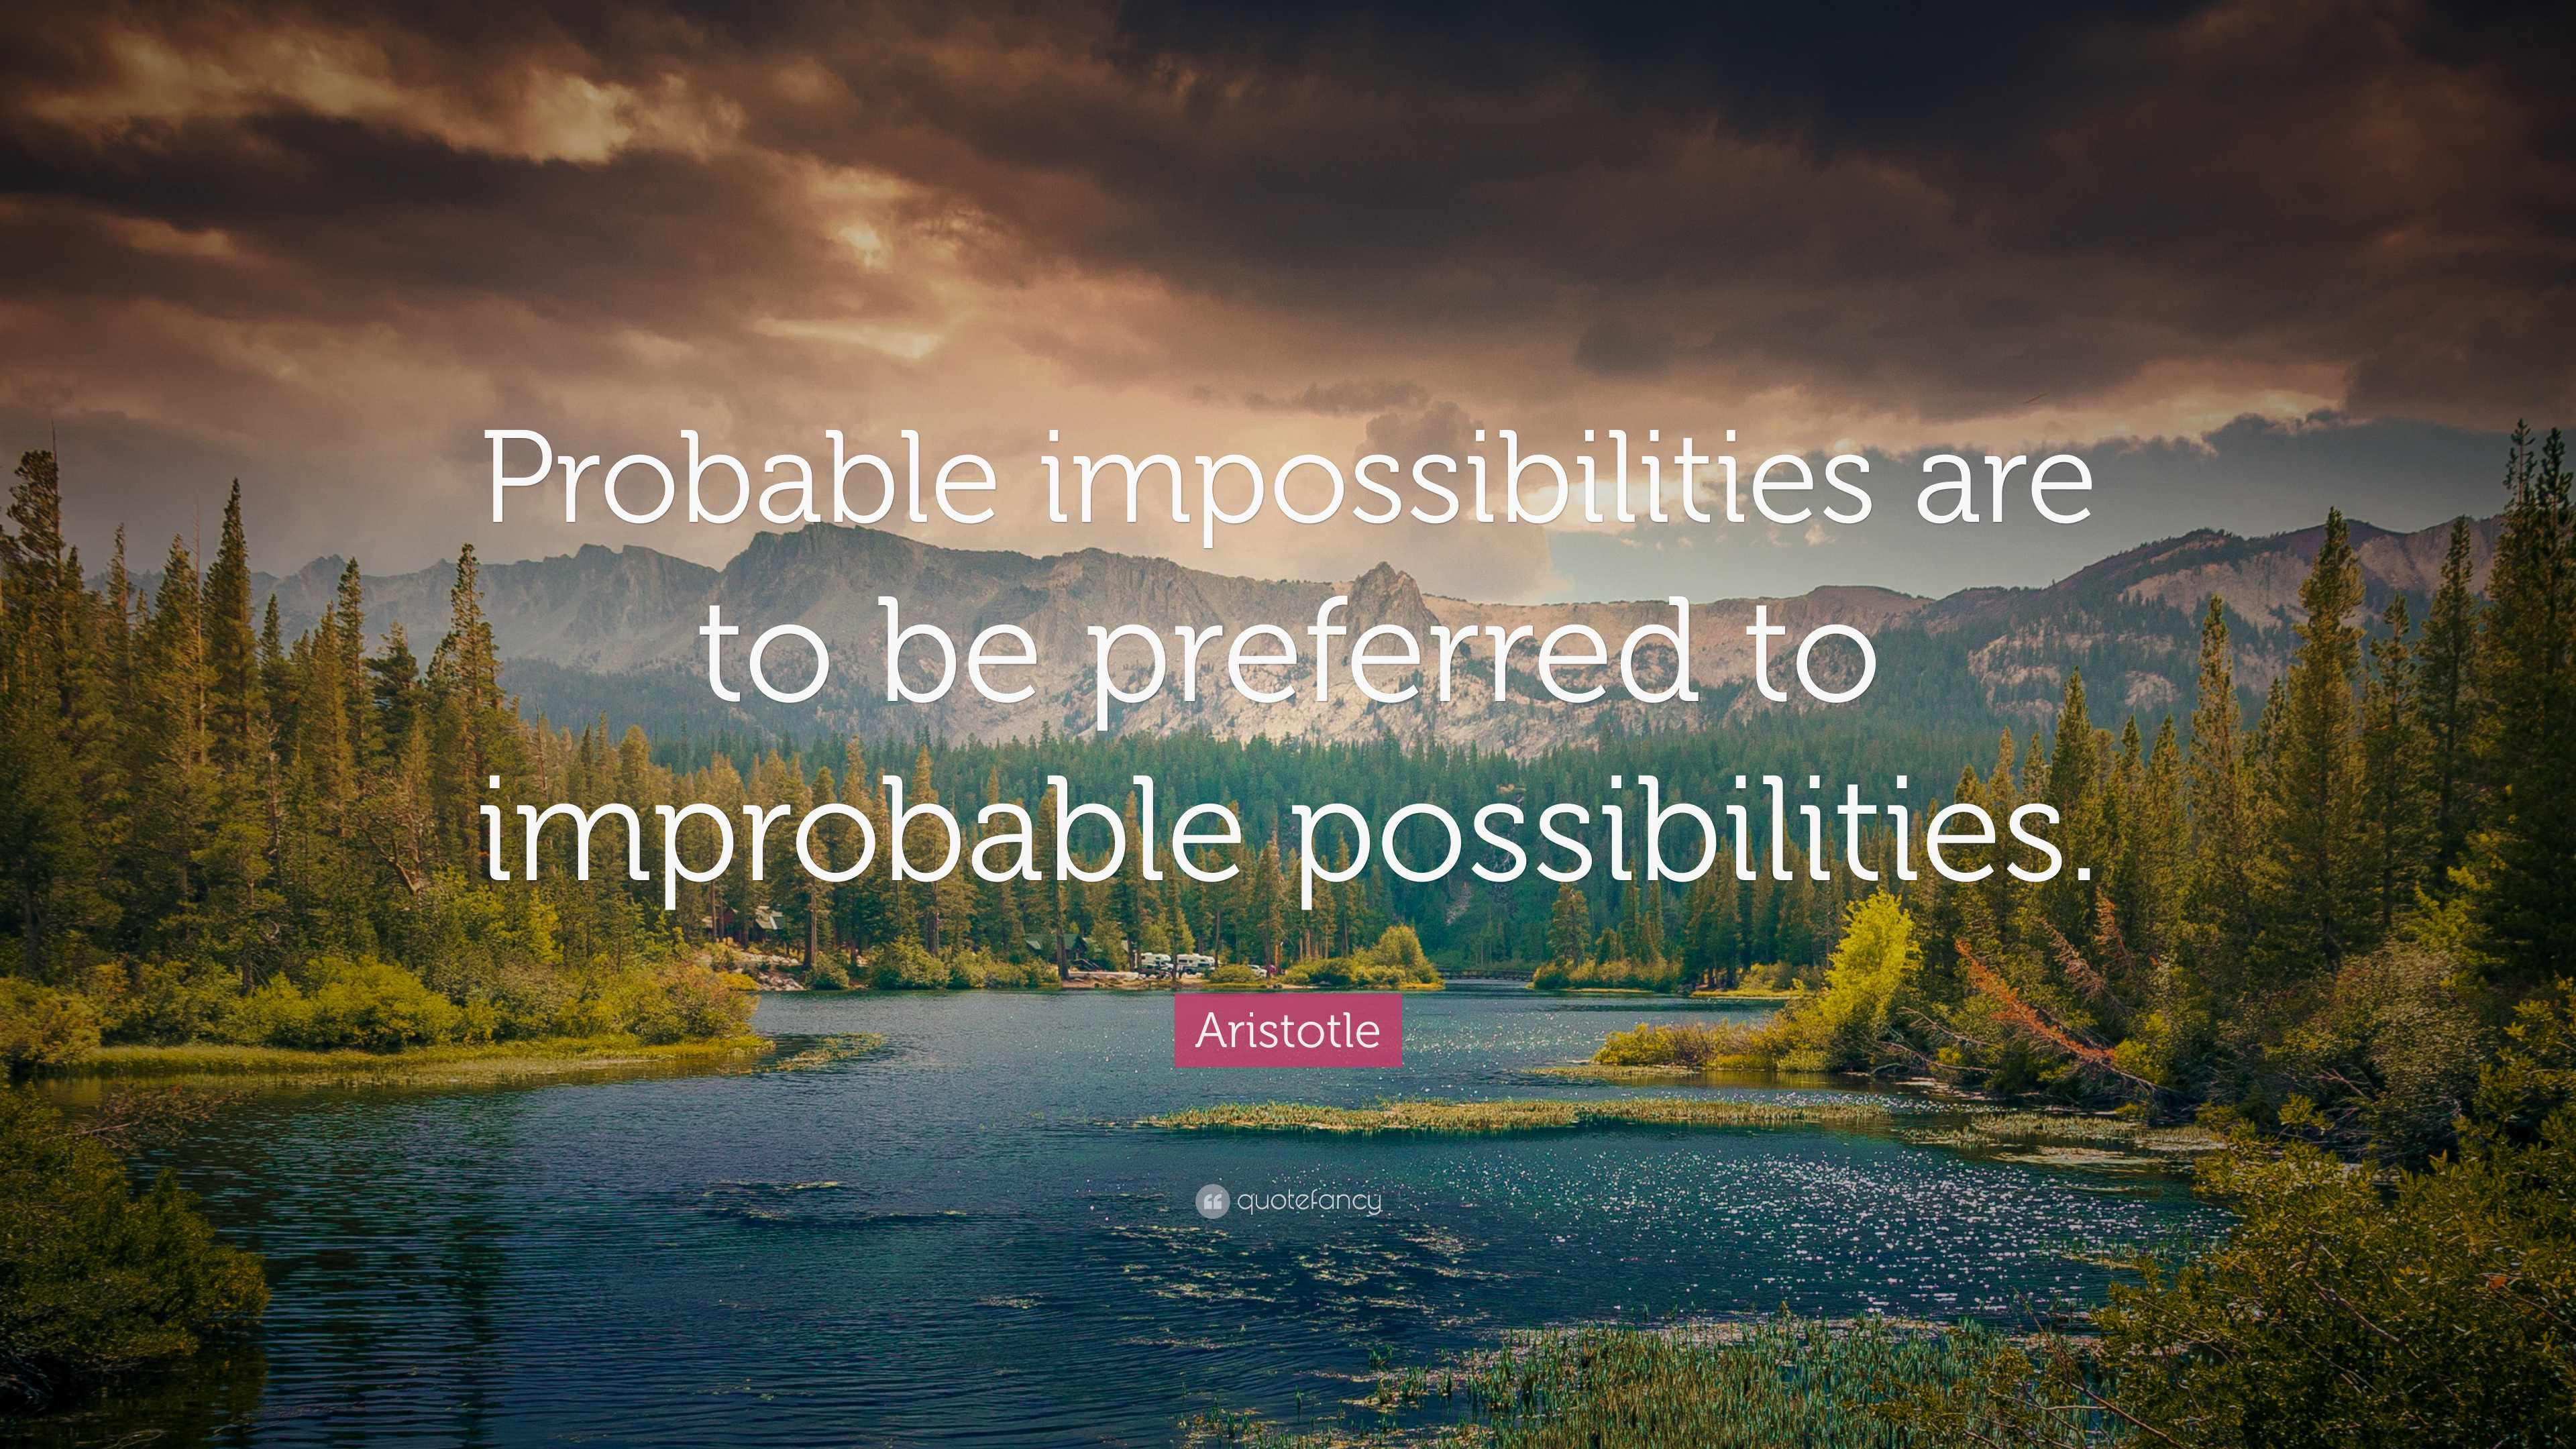 Aristotle Quote: “Probable impossibilities are to be preferred to  improbable possibilities.”